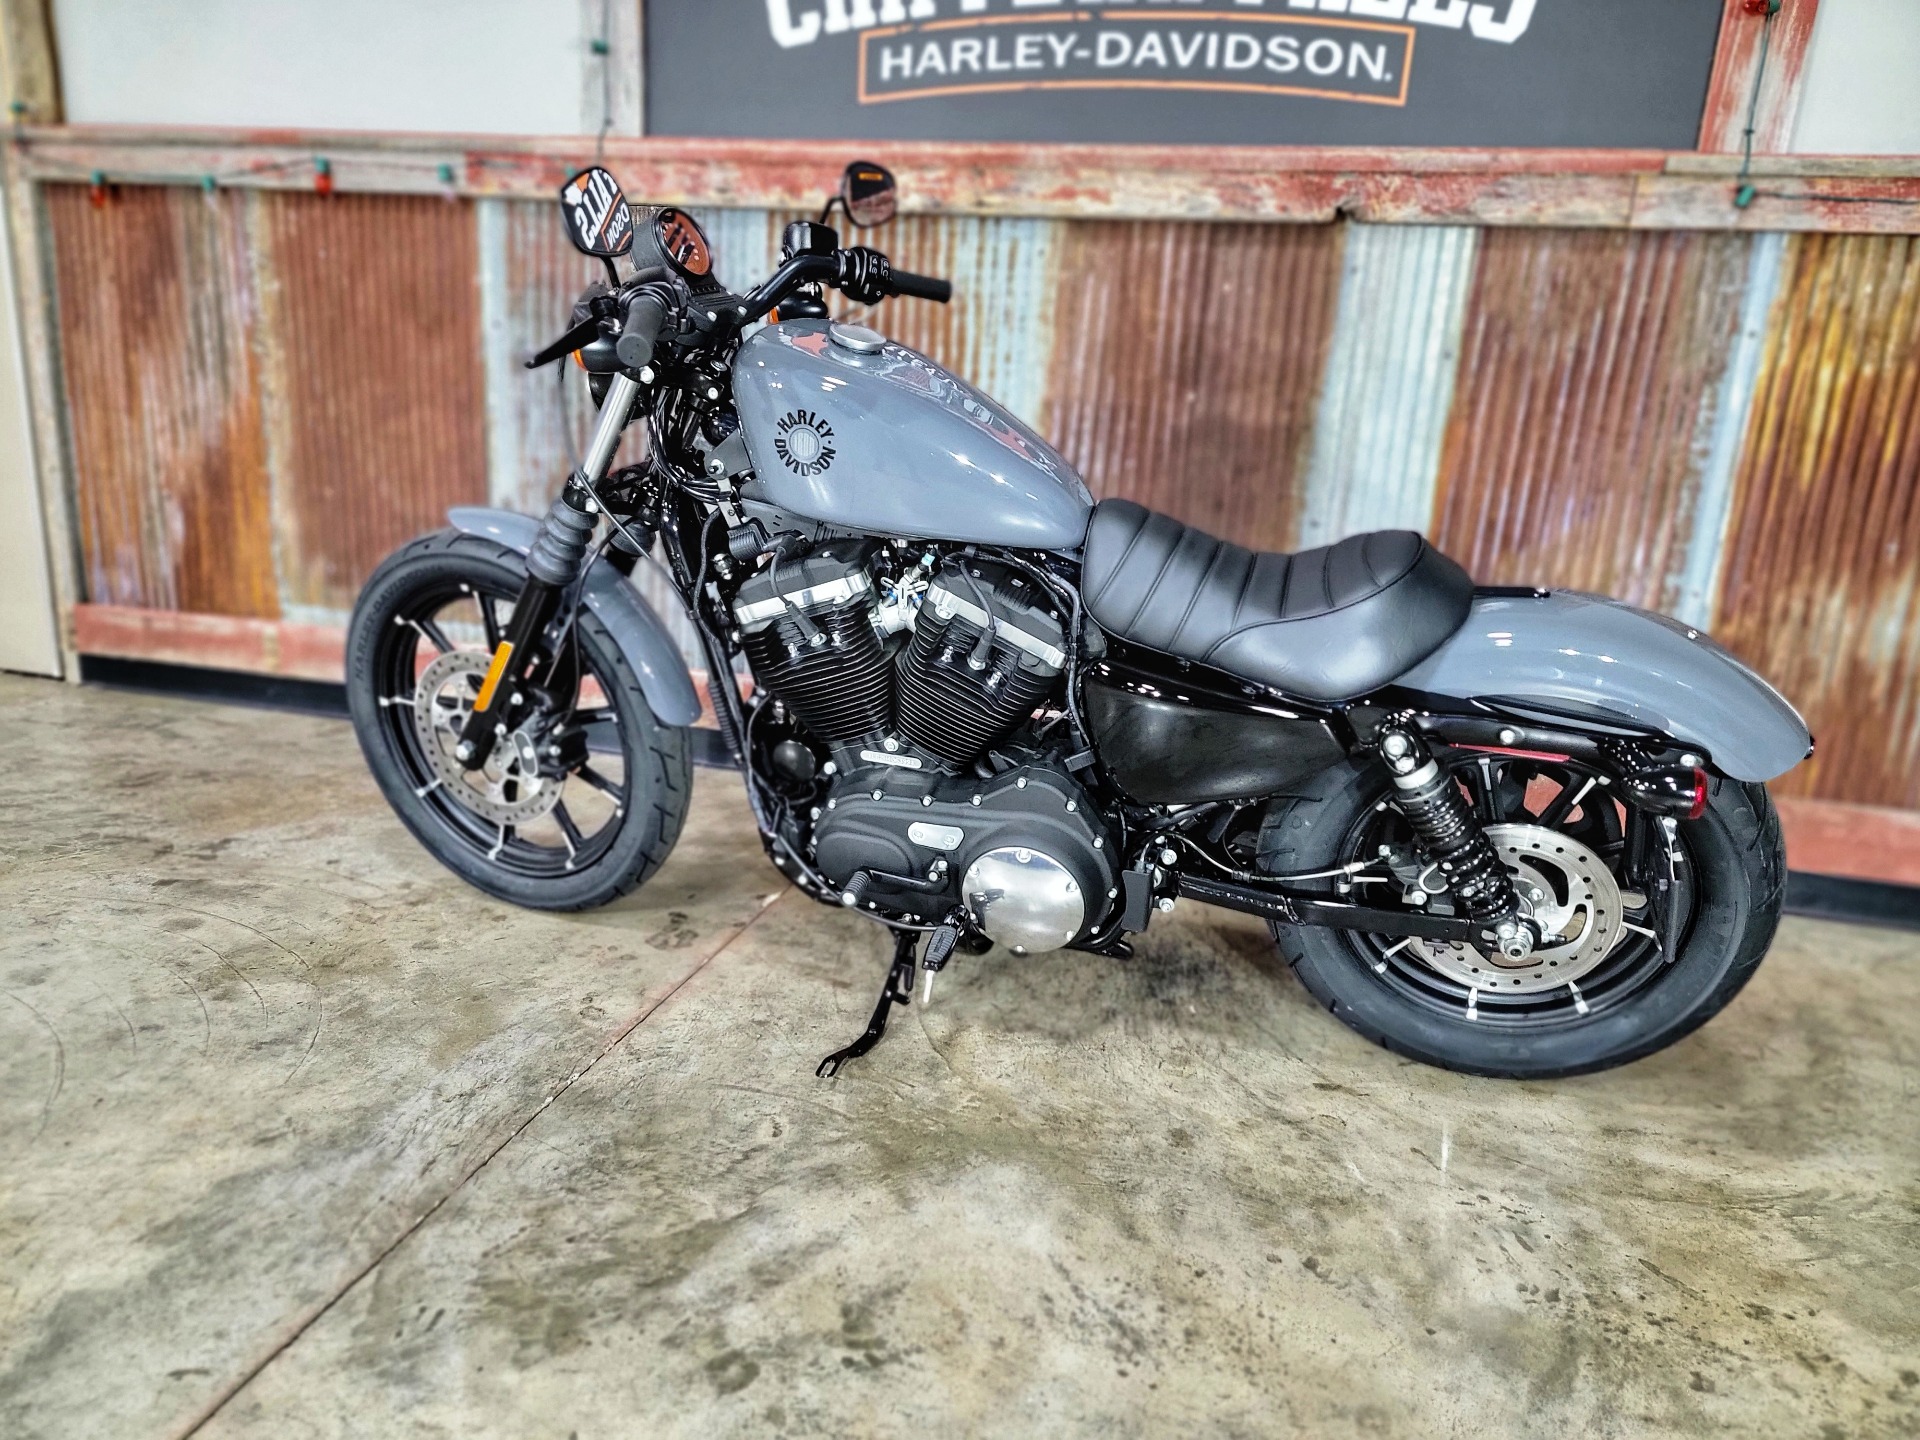 2022 Harley-Davidson Iron 883™ in Chippewa Falls, Wisconsin - Photo 13